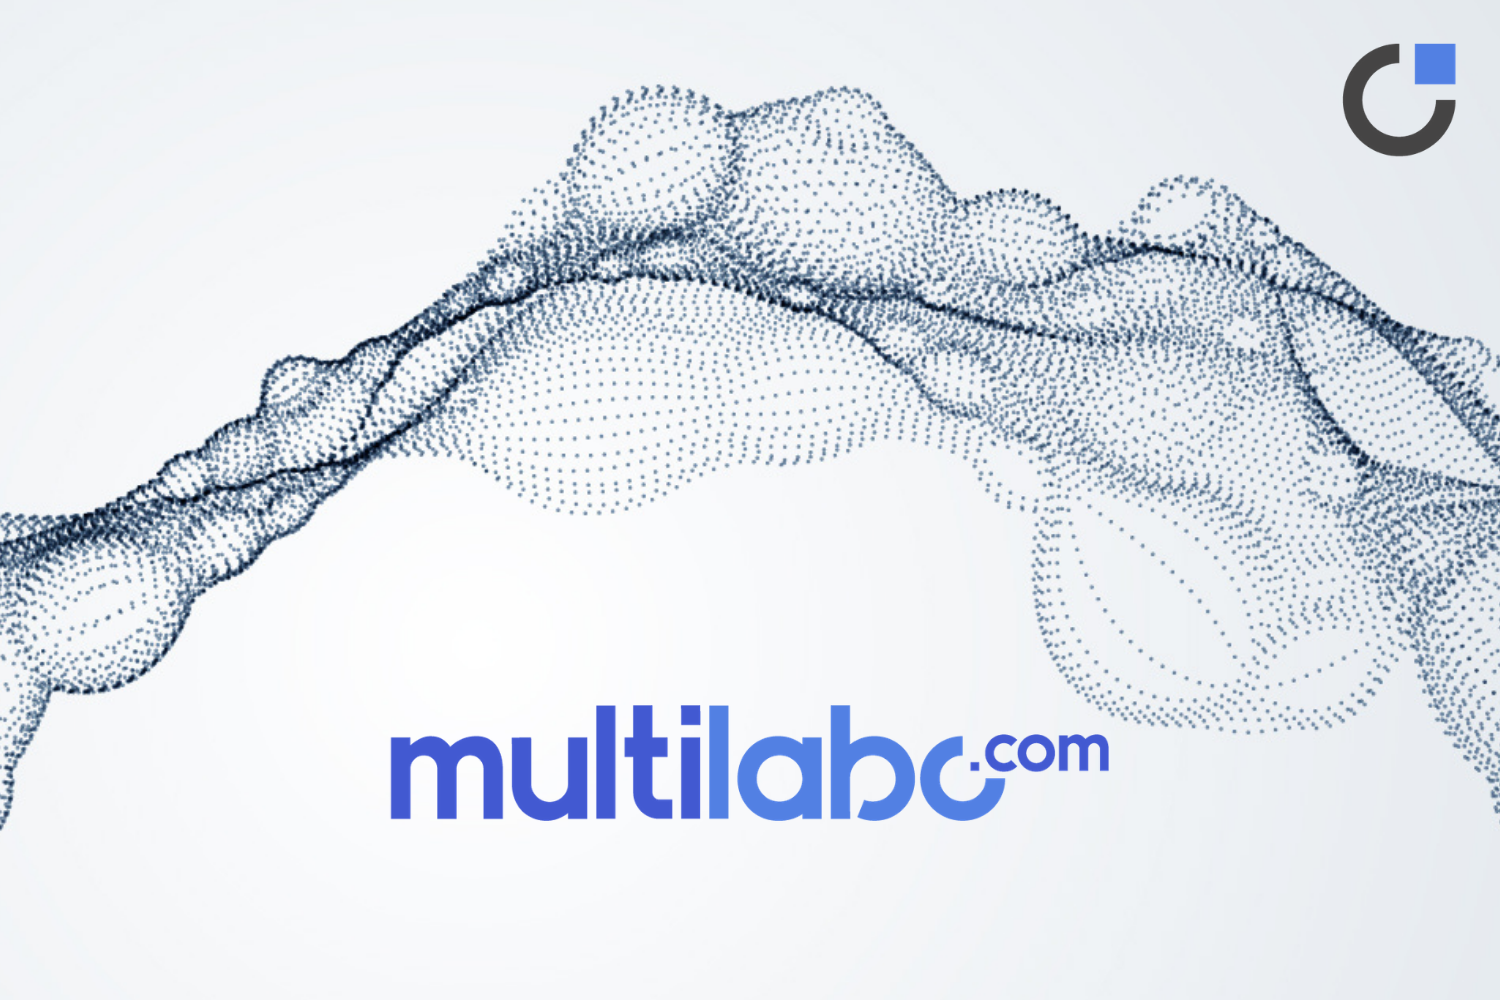 Multilabo.com